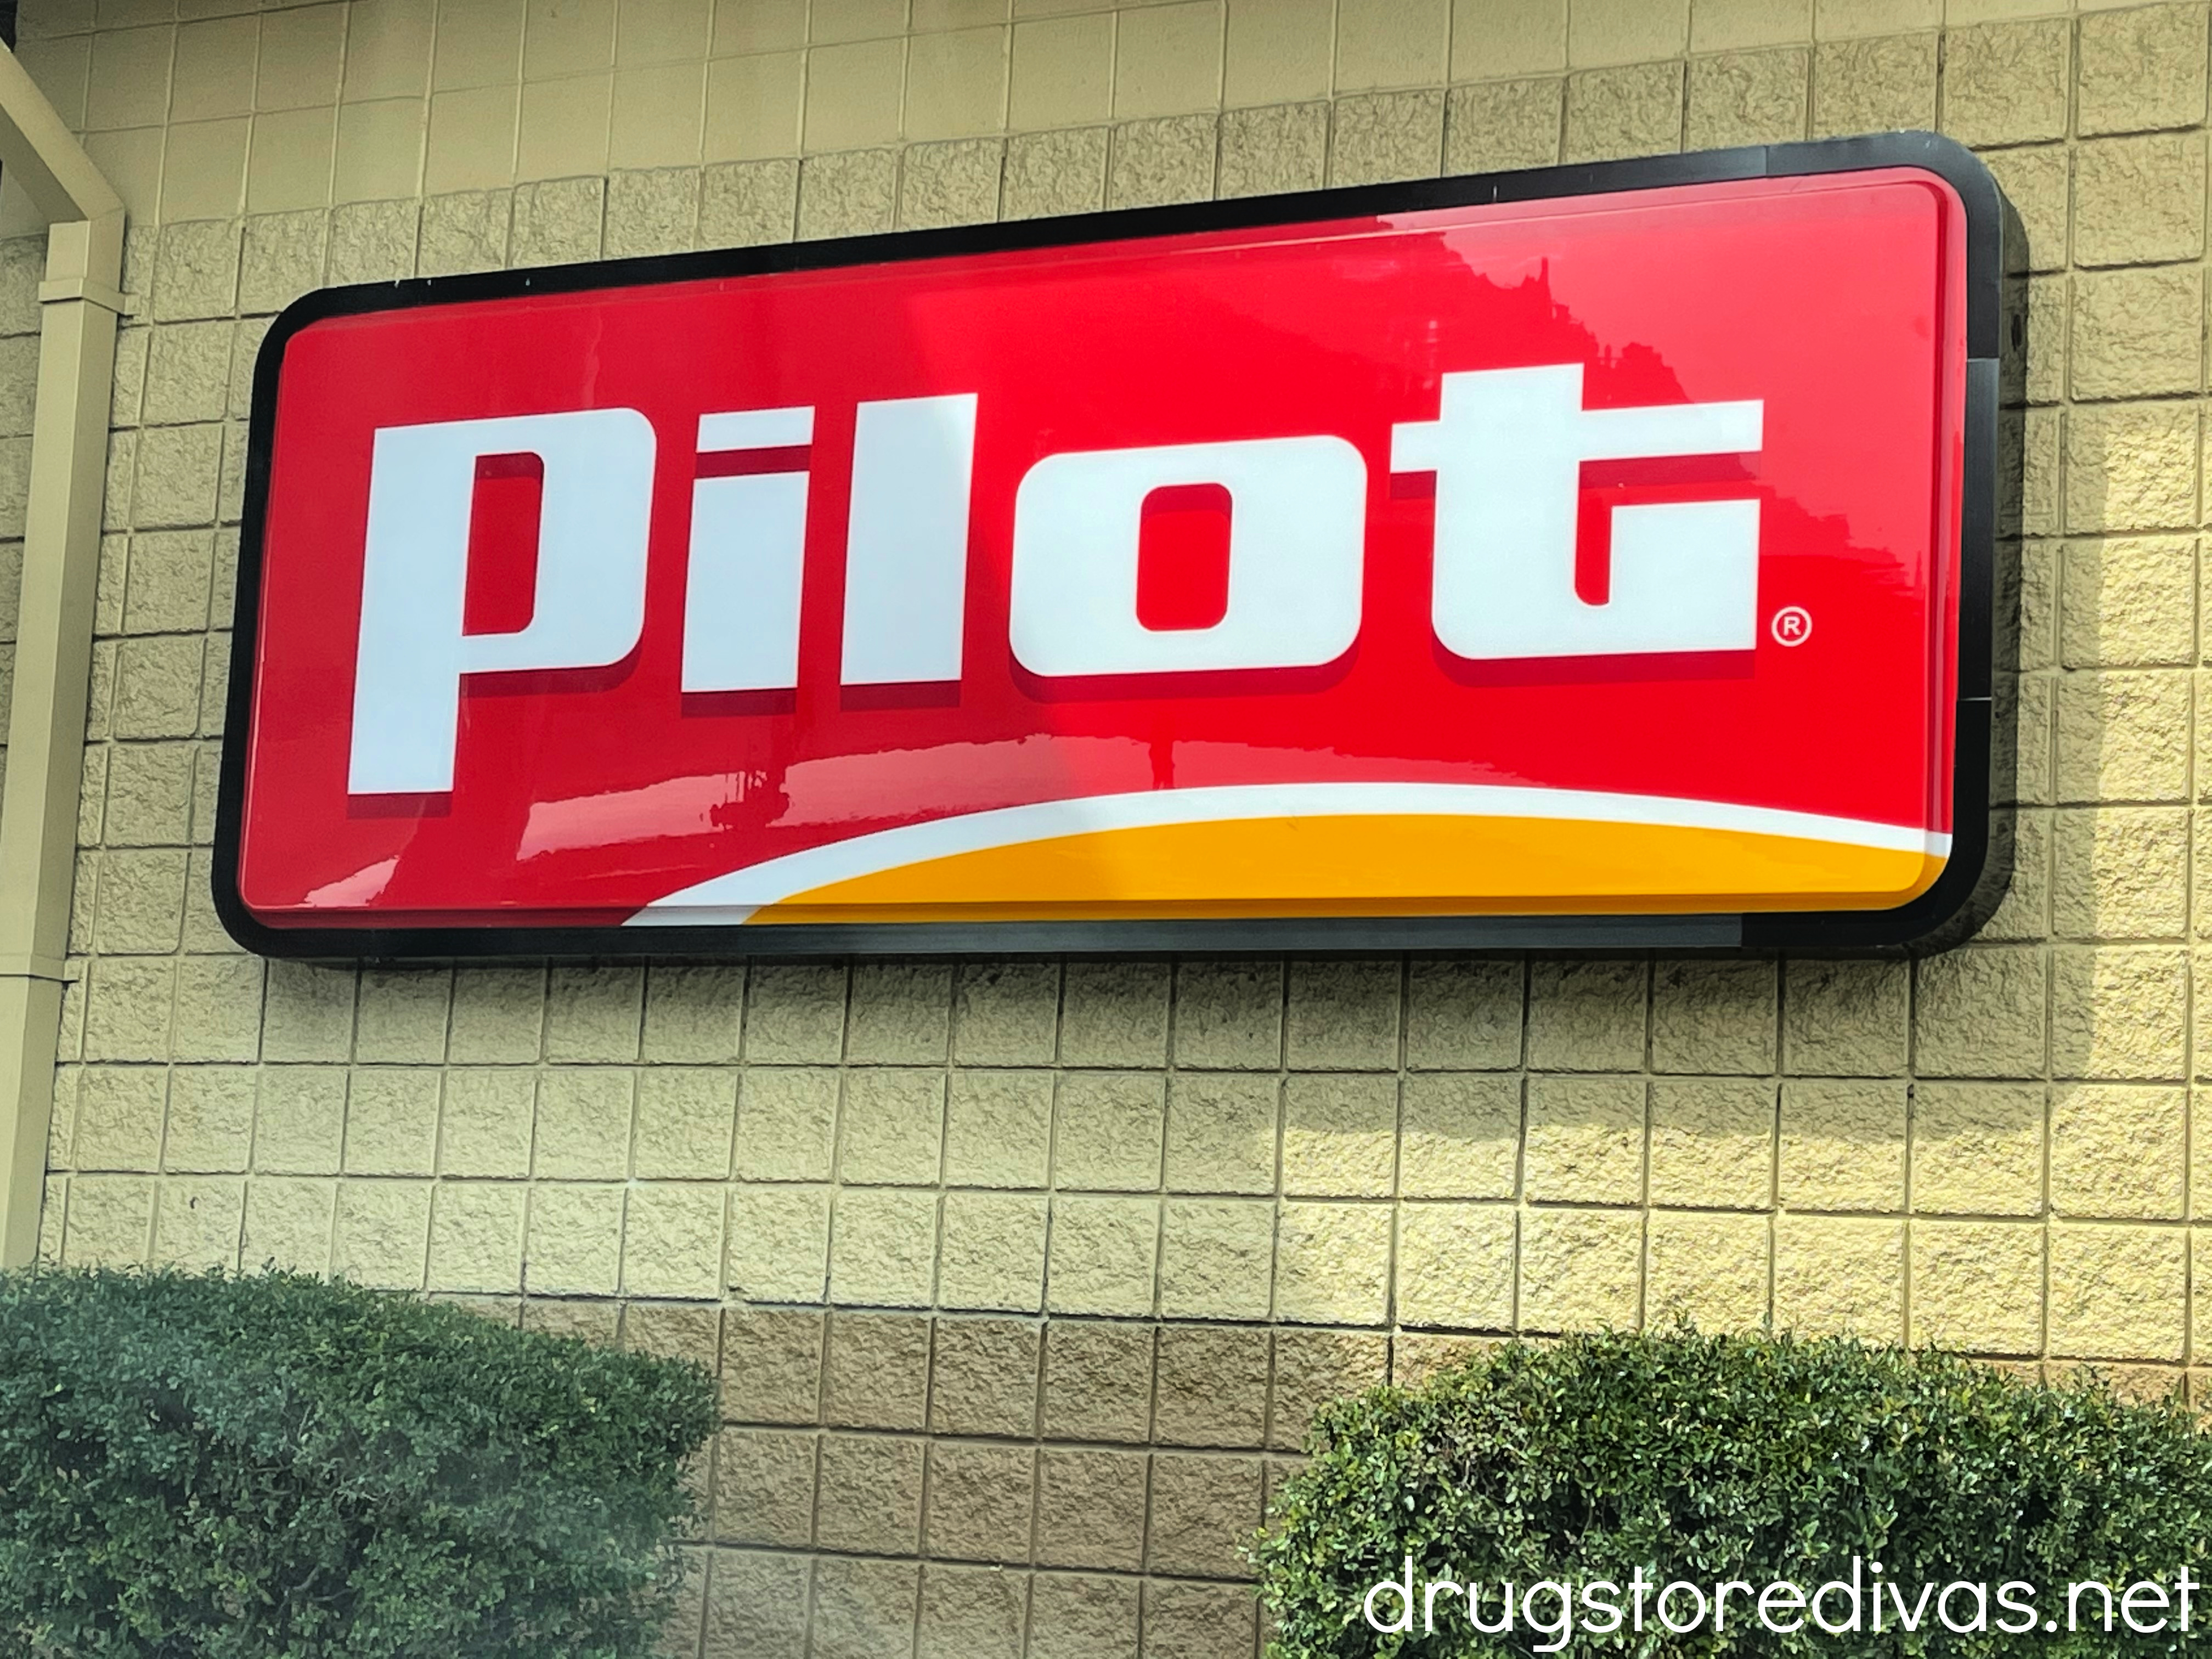 Pilot sign outside a Pilot gas station.